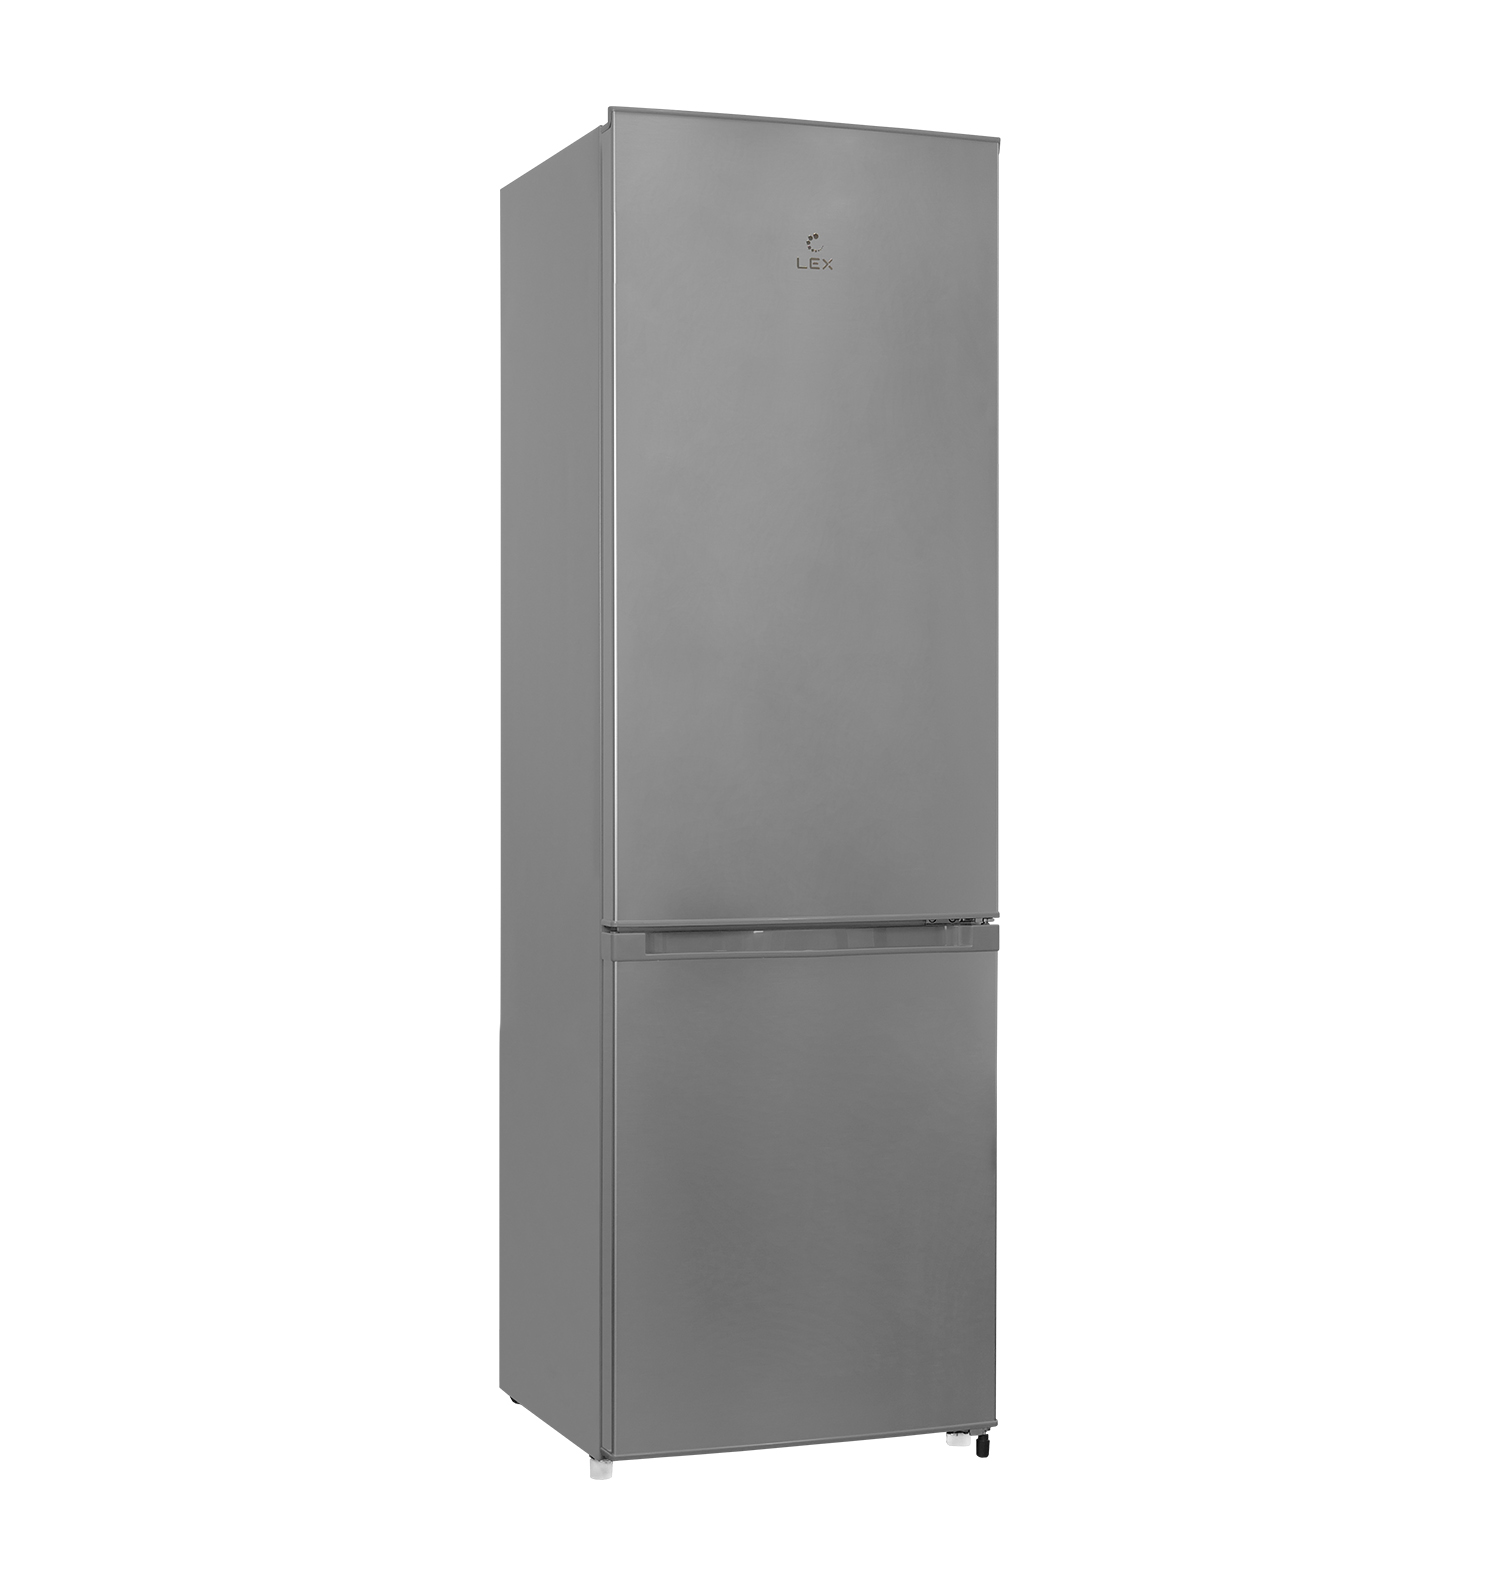 Ariston 4200 холодильник. Холодильник Lex RFS 202 DF inox. Холодильник Lex RFS 202 DF IX. Холодильник Hotpoint-Ariston HTS 4200. Холодильник don r-295 ng.